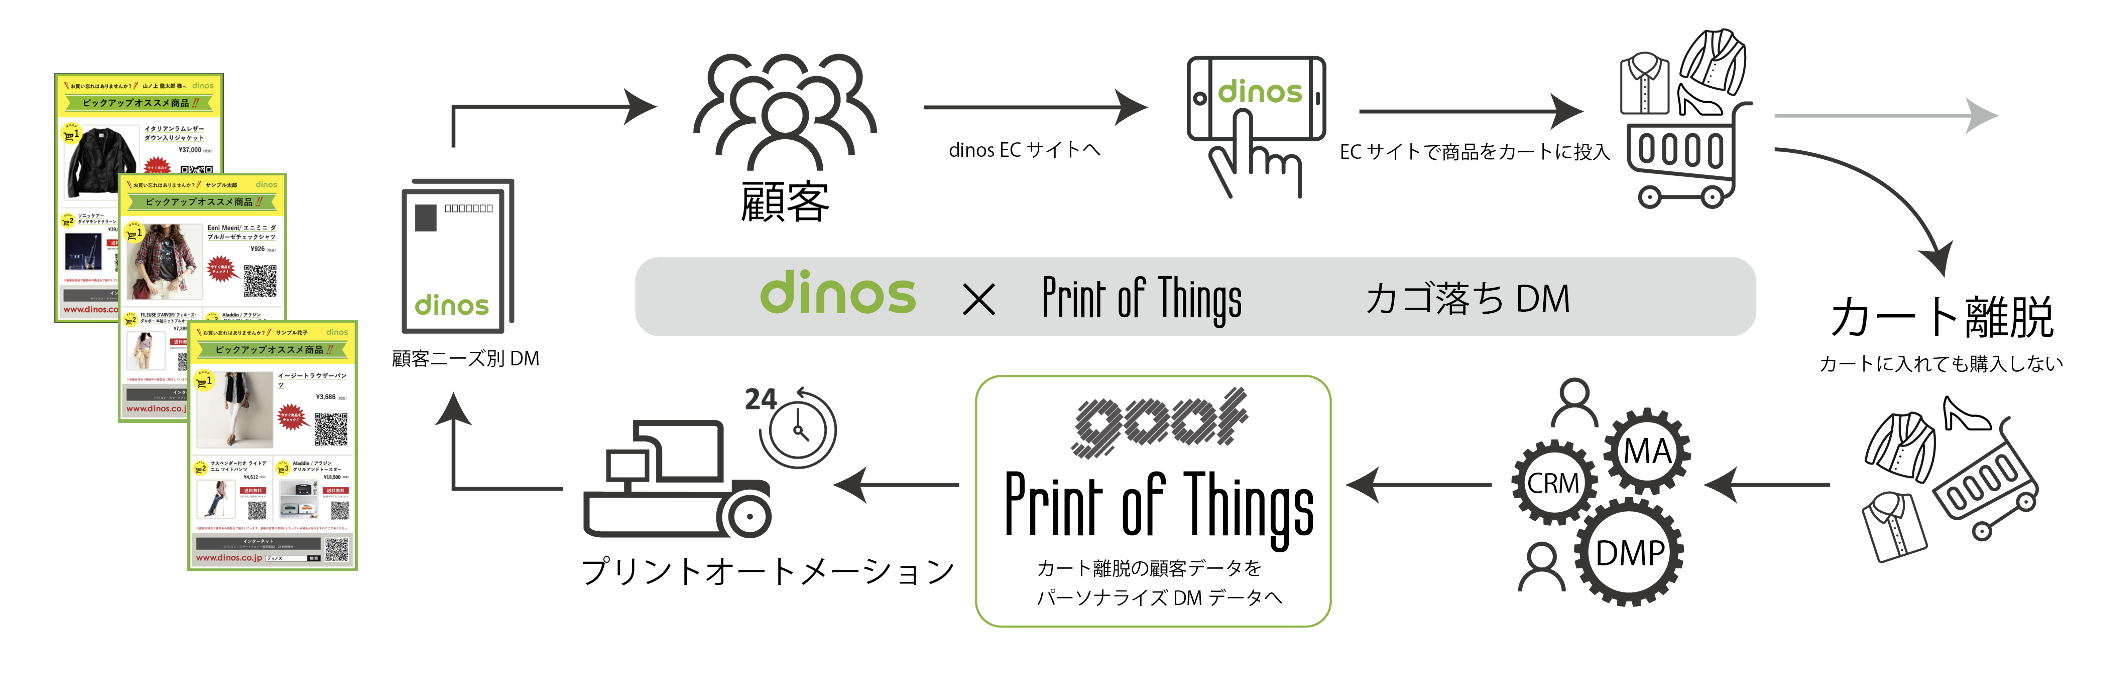 Print of Things_ dinos